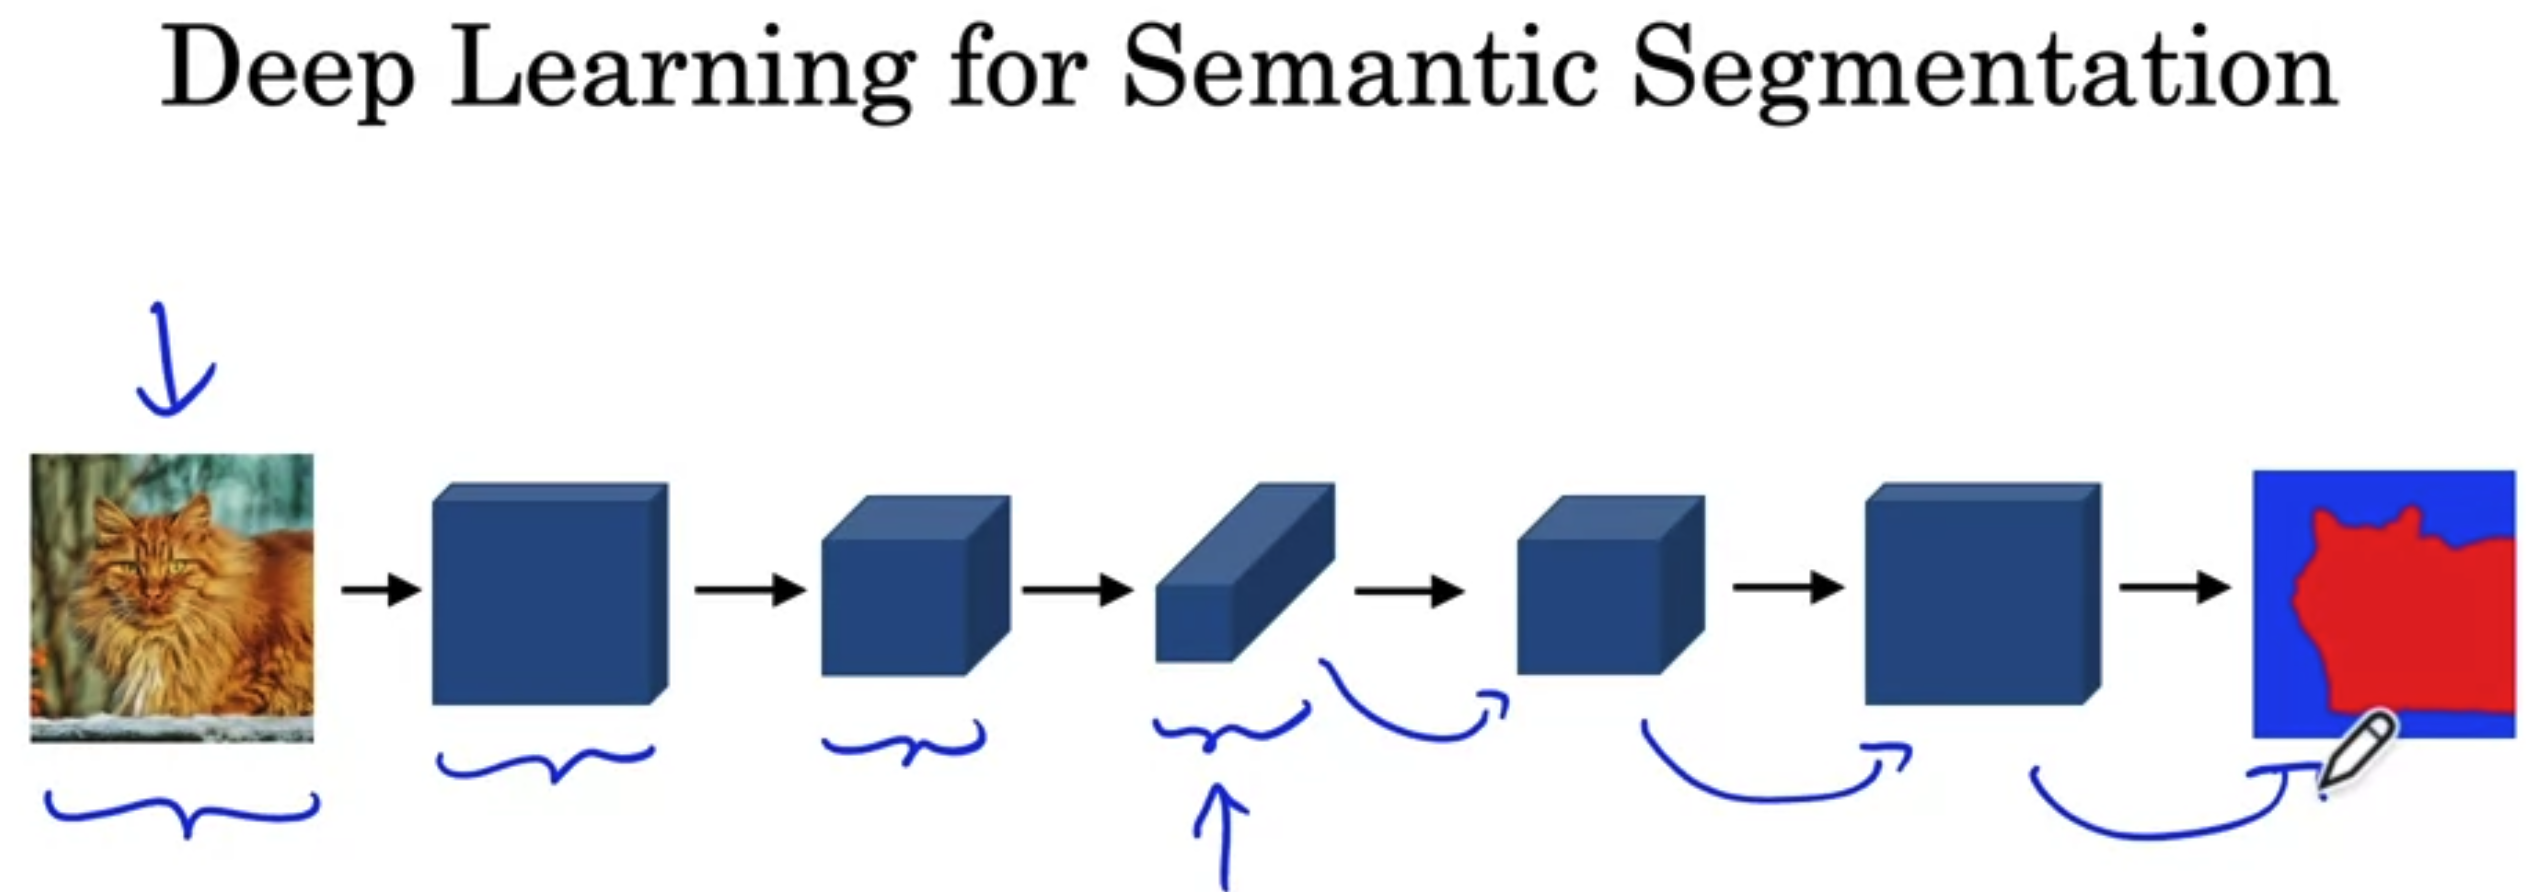 Deep Learning for Semantic Segmentation